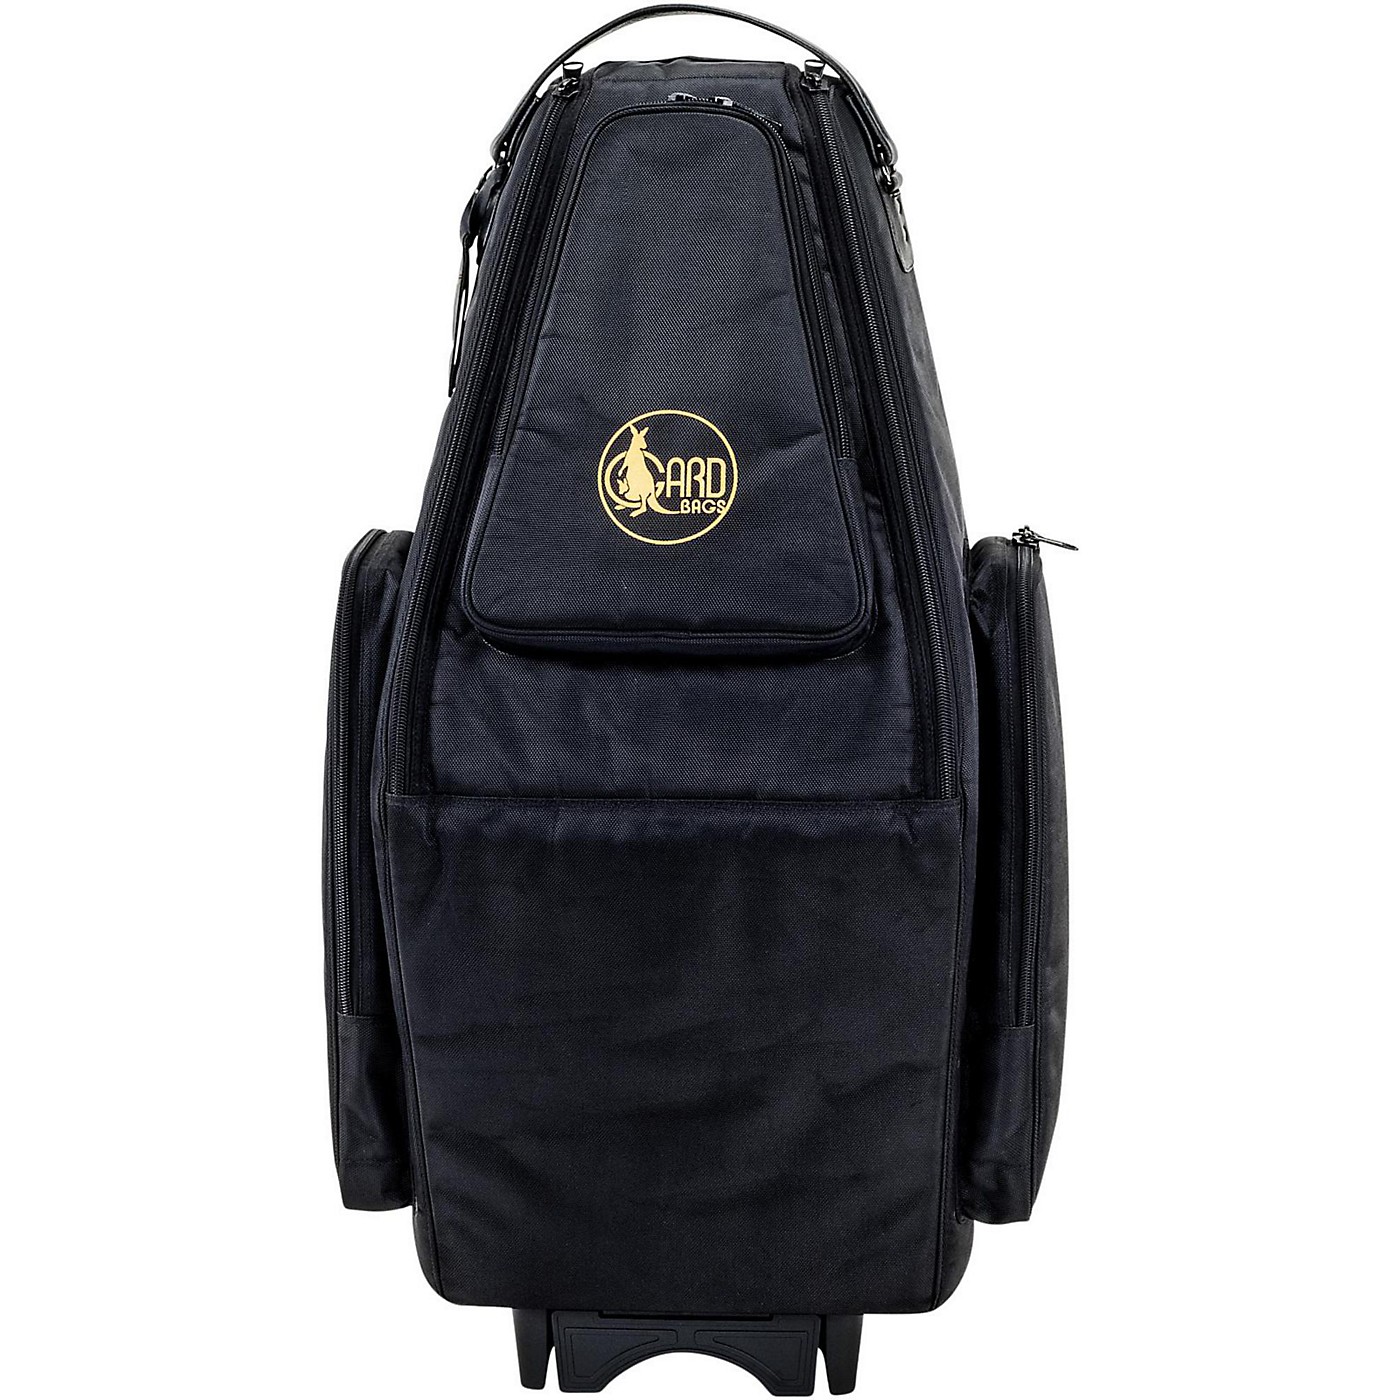 Gard Saxophone Wheelie Bag, Synthetic With Leather Trim thumbnail